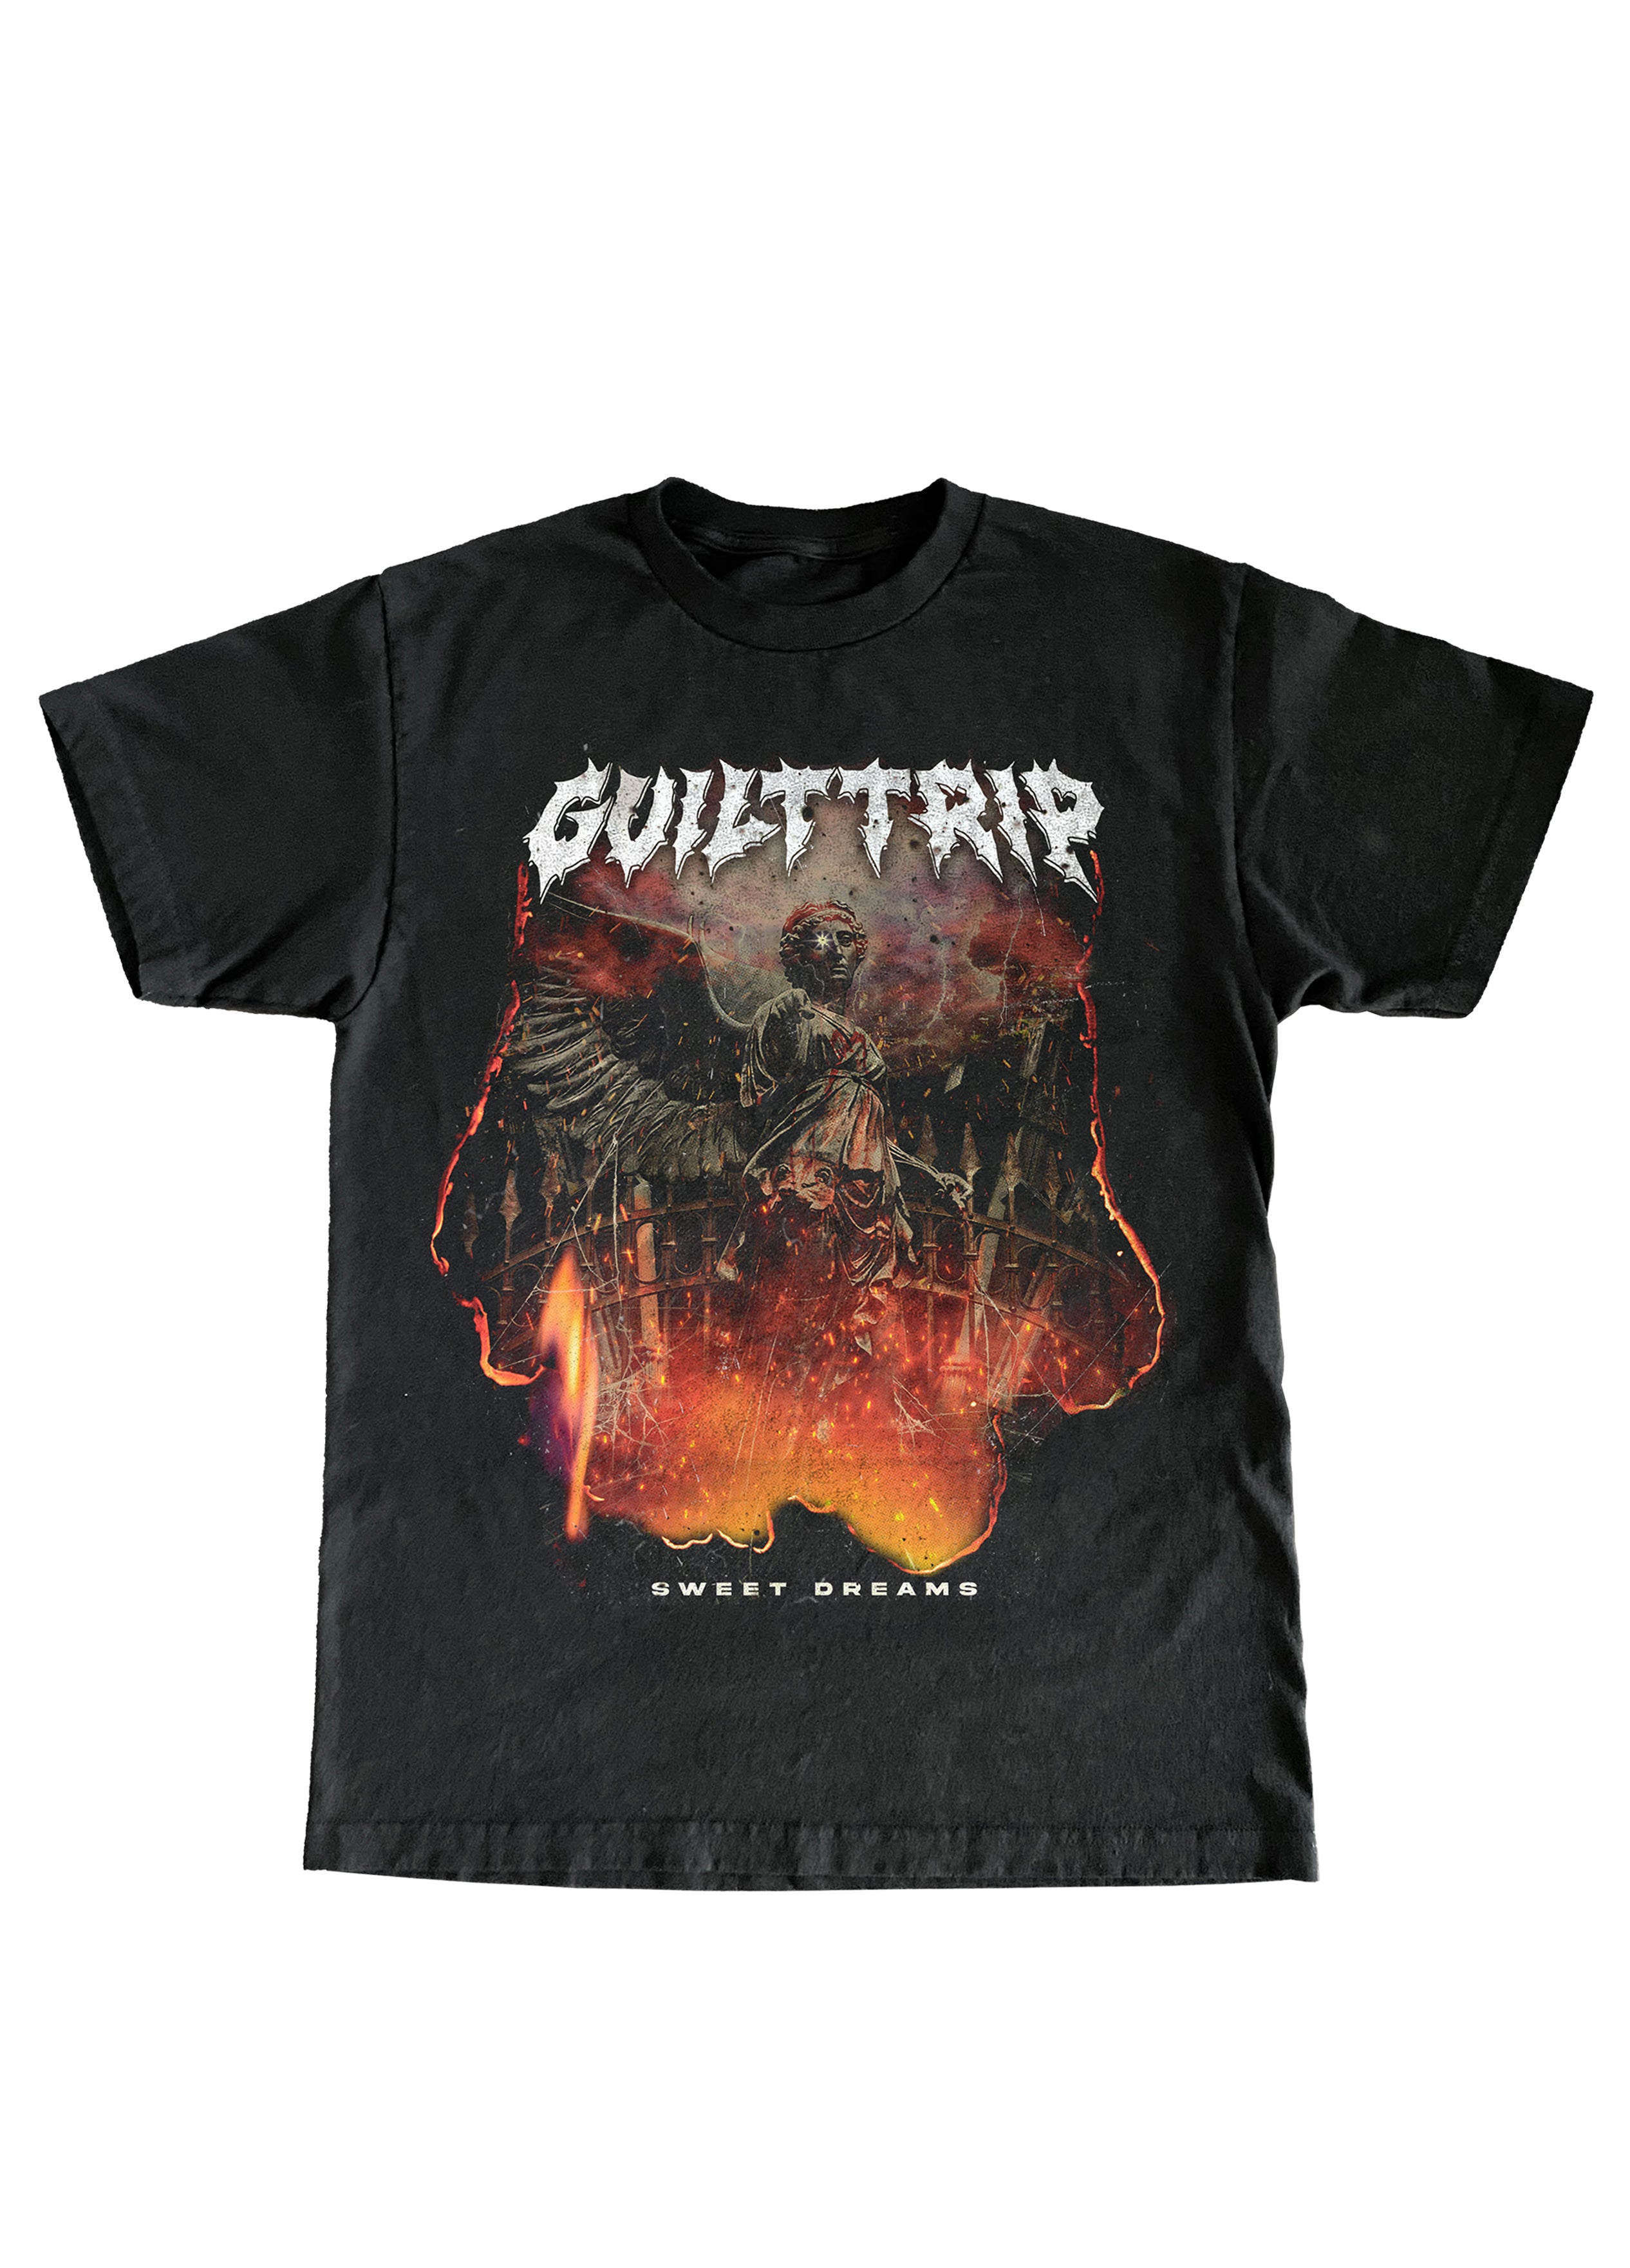 Guilt Trip - Sweet Dreams Artwork T-Shirt